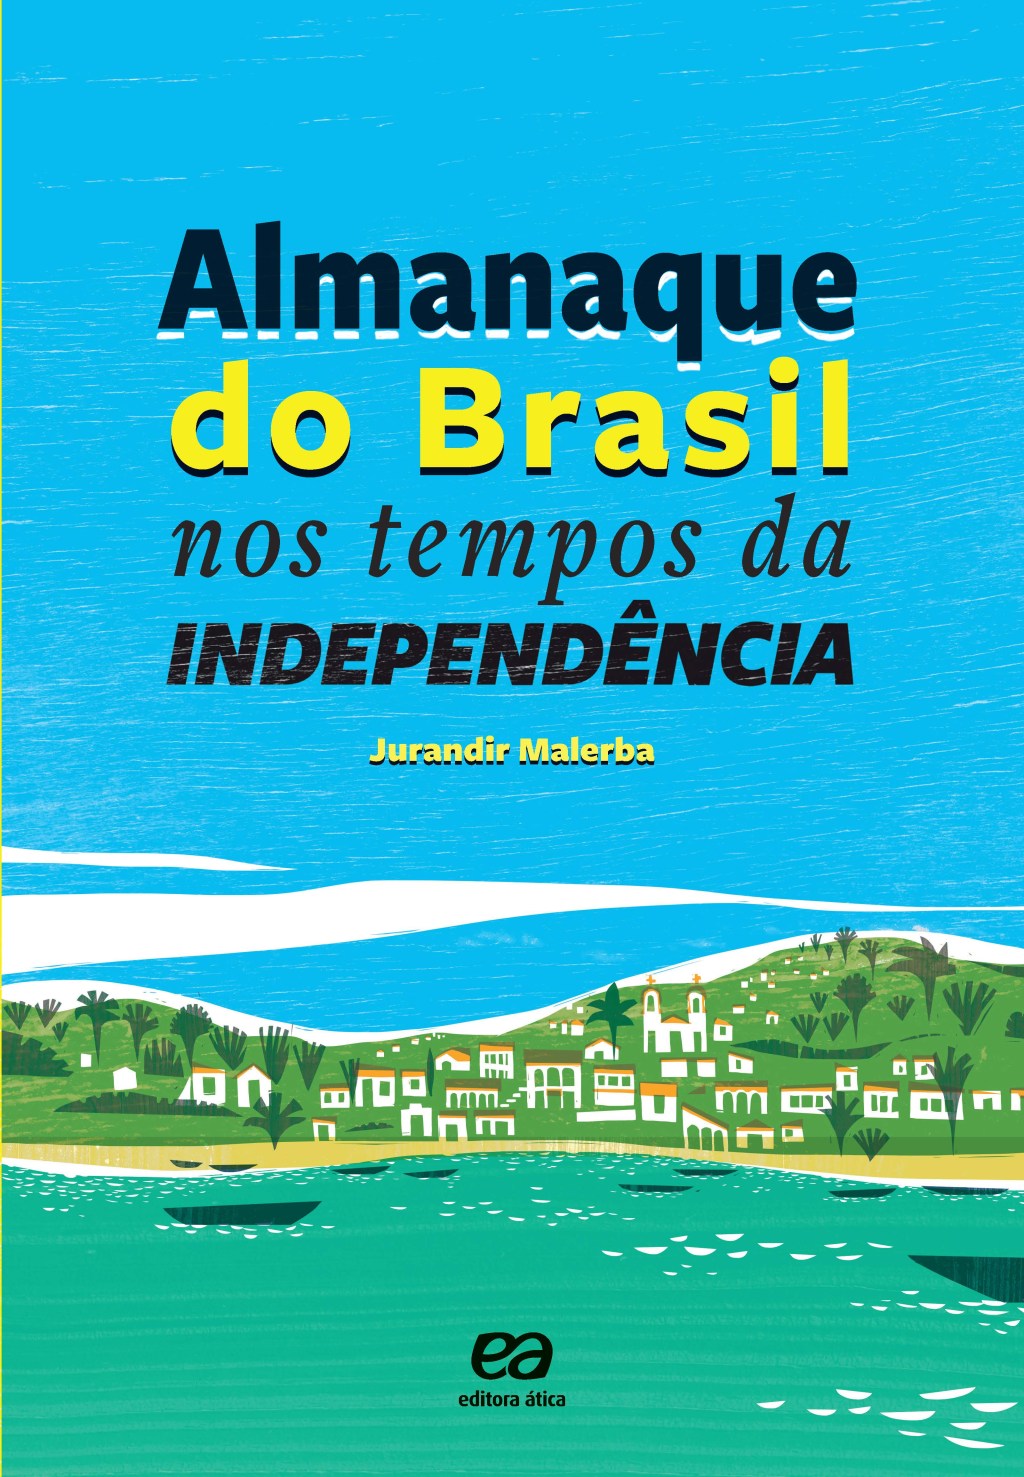 Almanaque da História do Brasil nas Independências - Jurandir Malerba